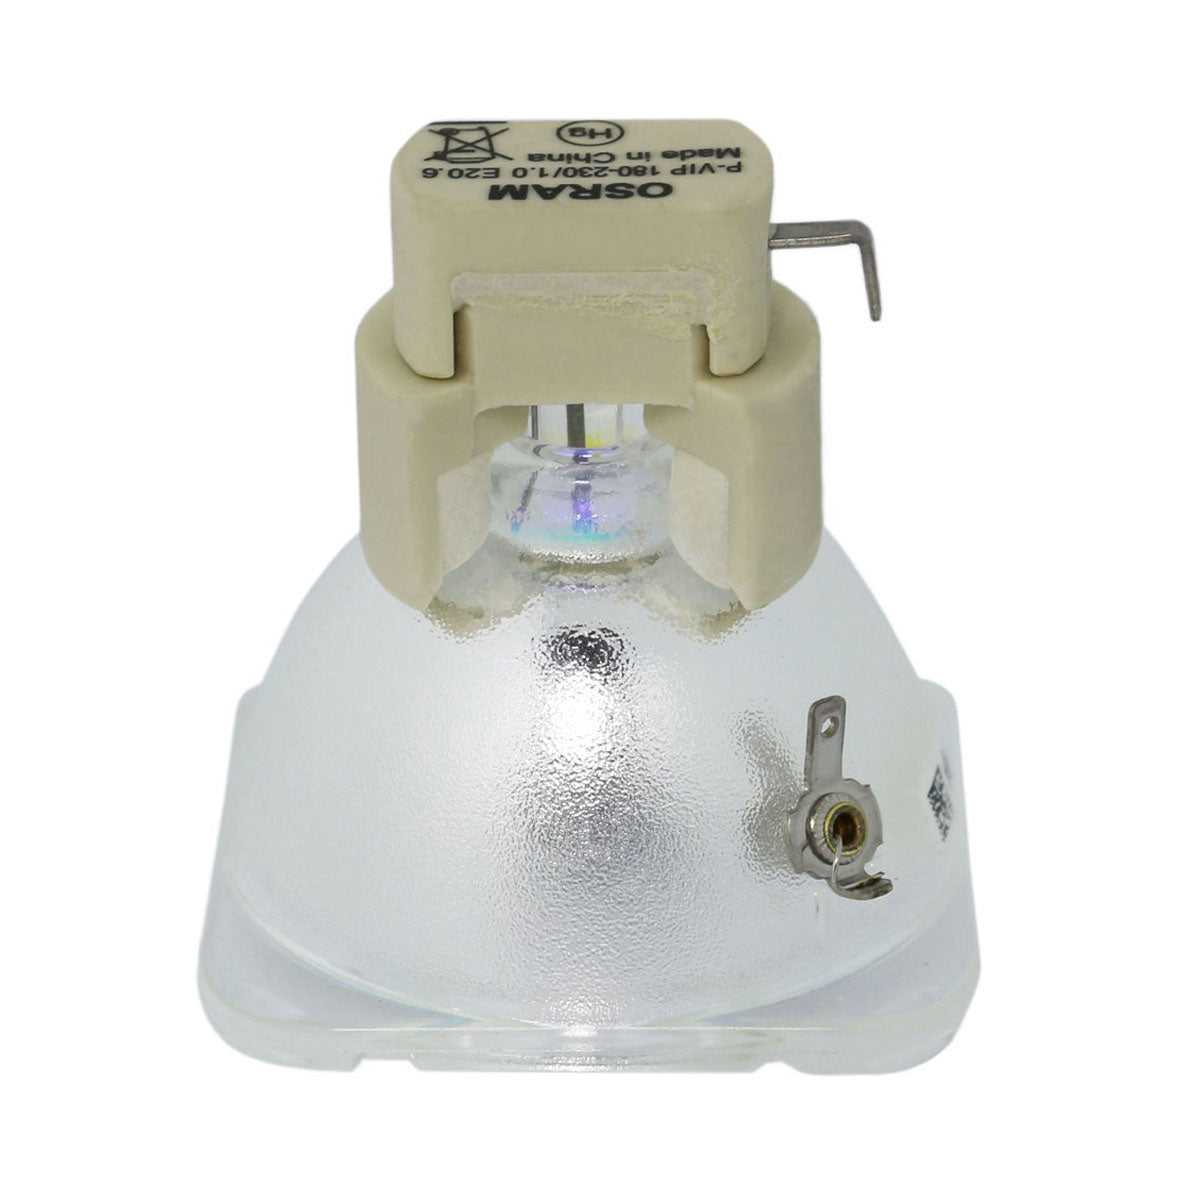 Taxan KGLPS1230 Osram Projector Bare Lamp